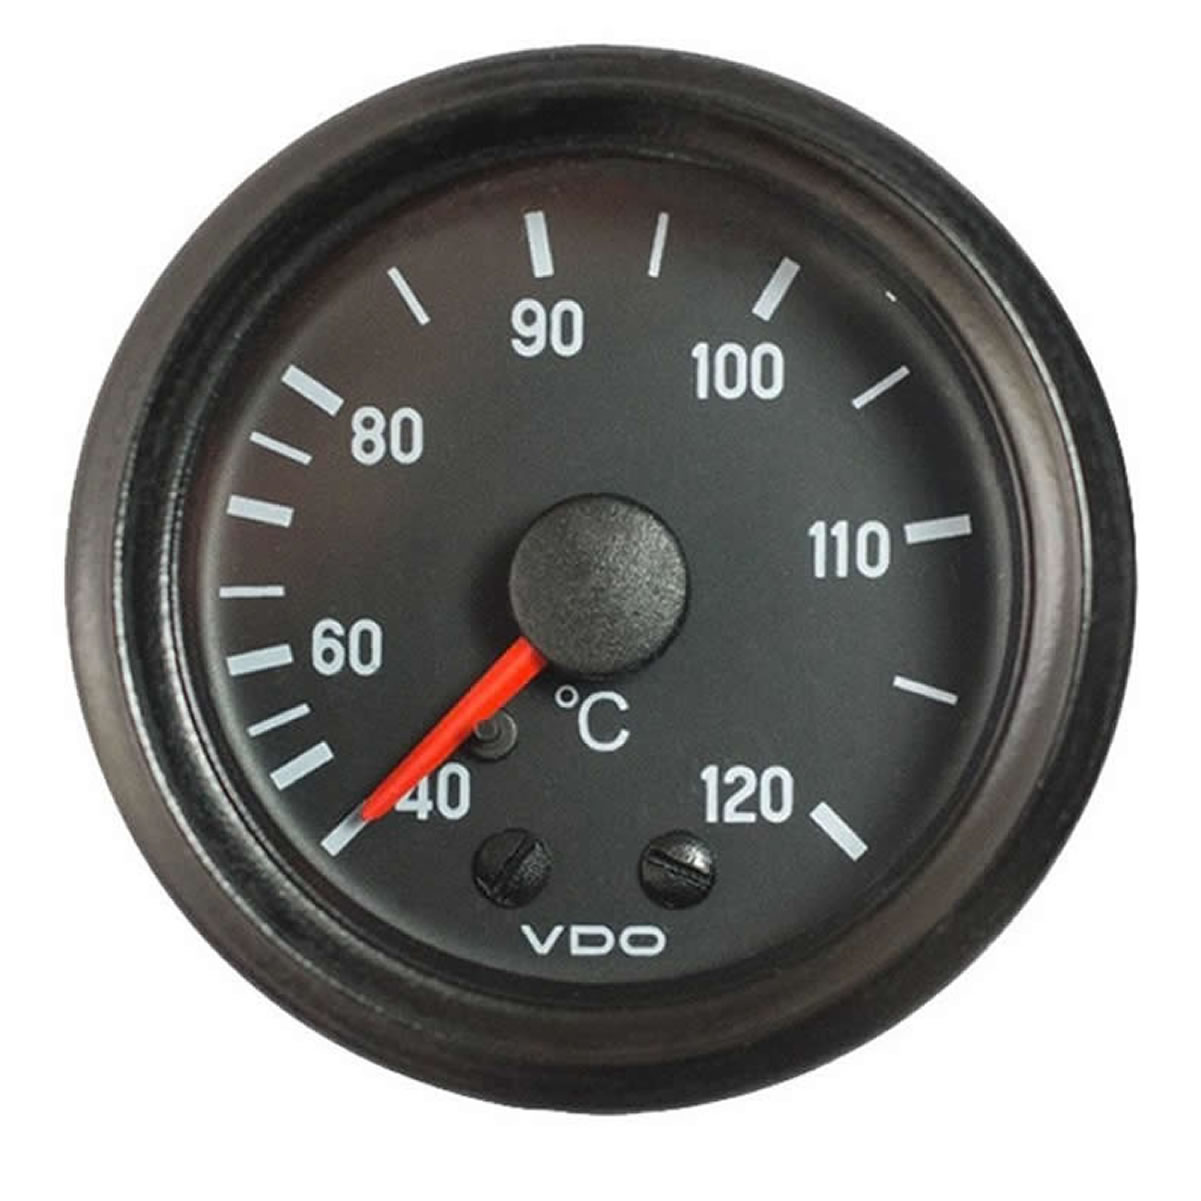 VDO Coolant temperature mechanical Gauges 120C